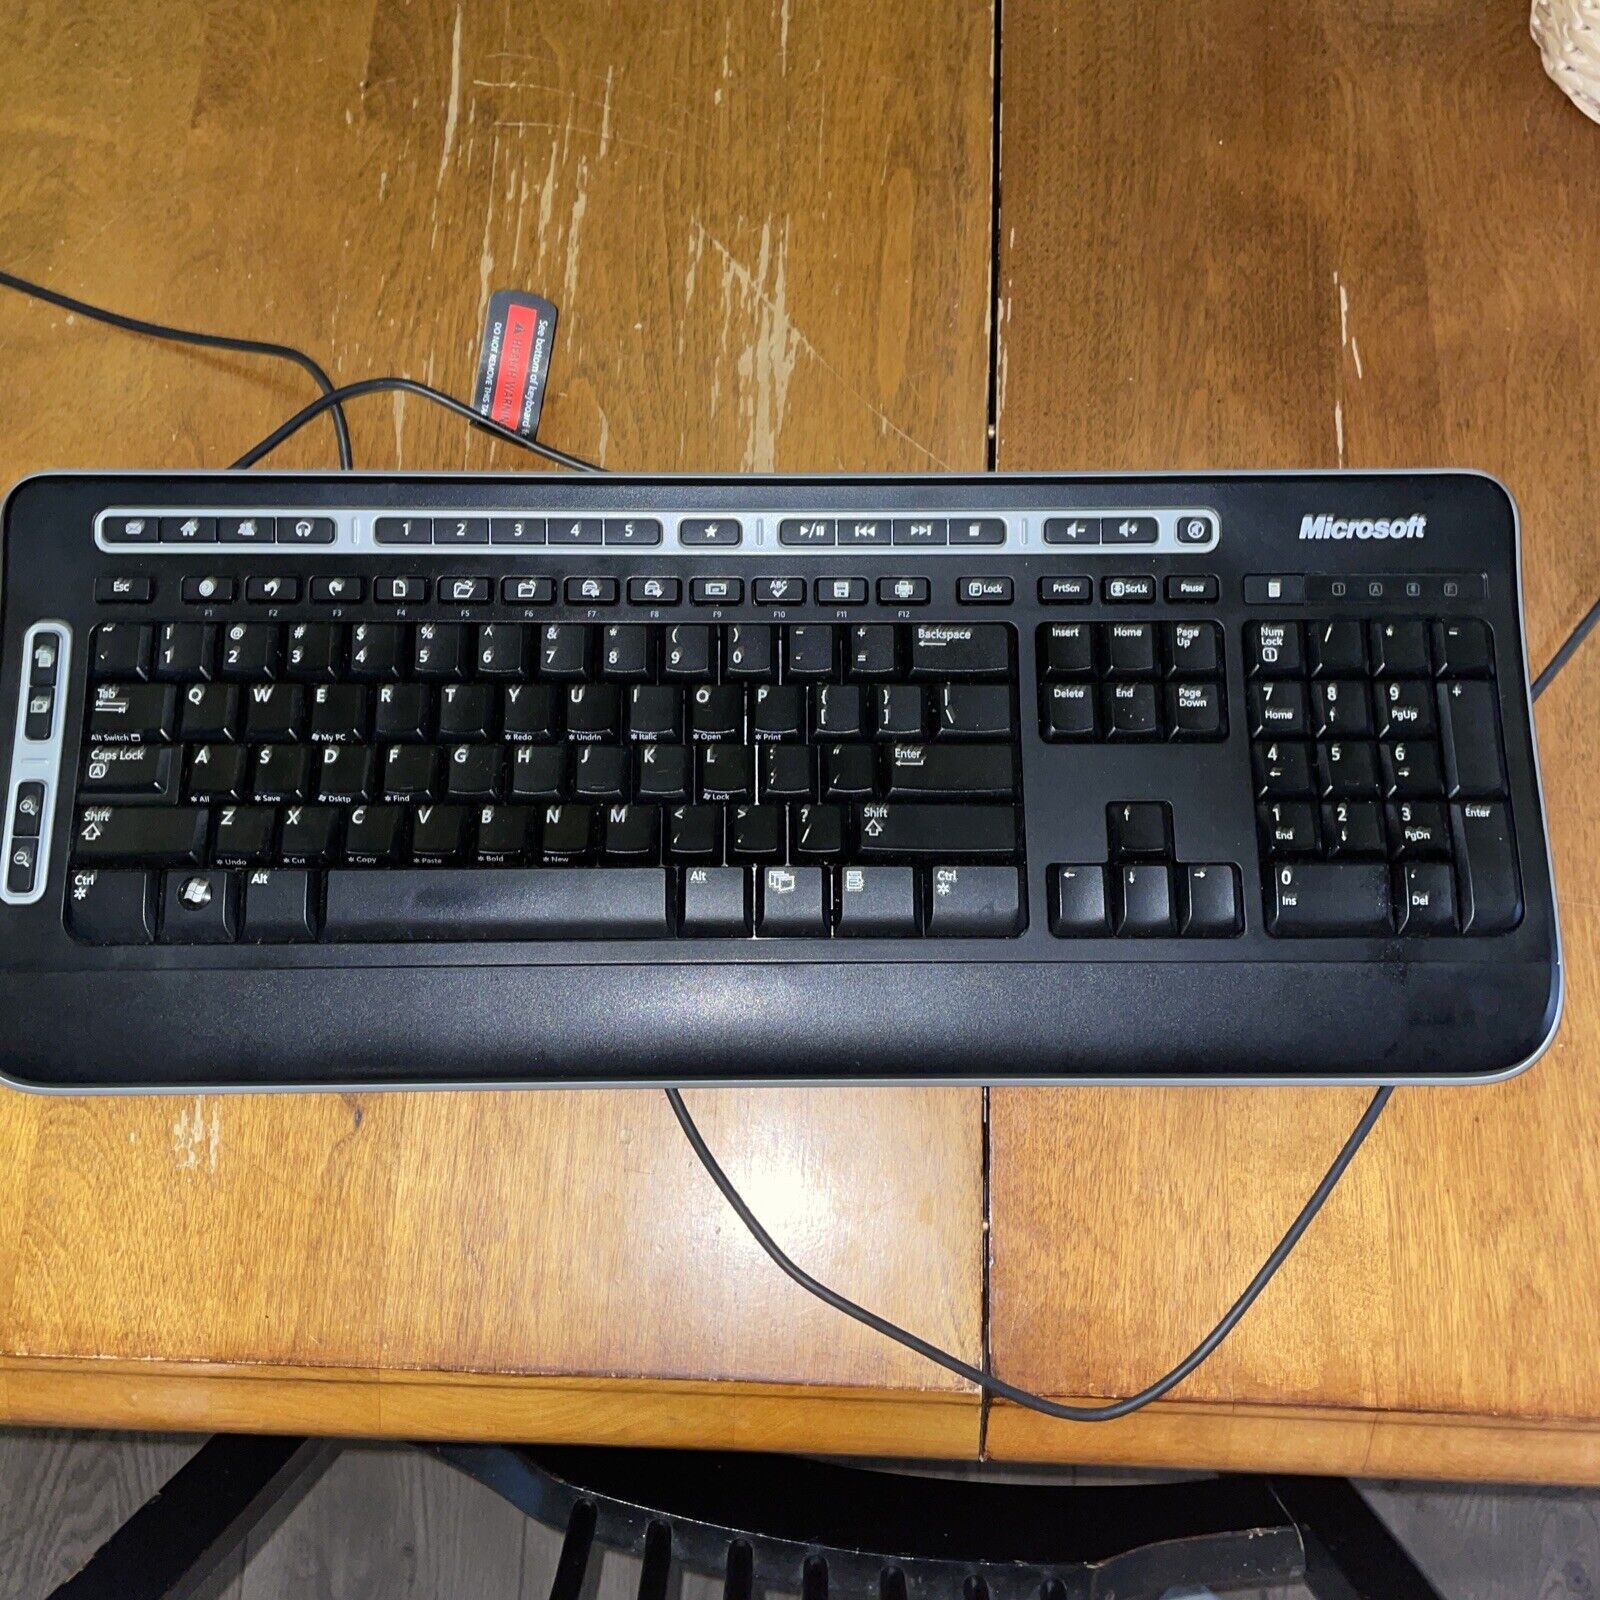 Microsoft Digital Media Keyboard 3000 Model 1343 USB Wired Multimedia - TESTED